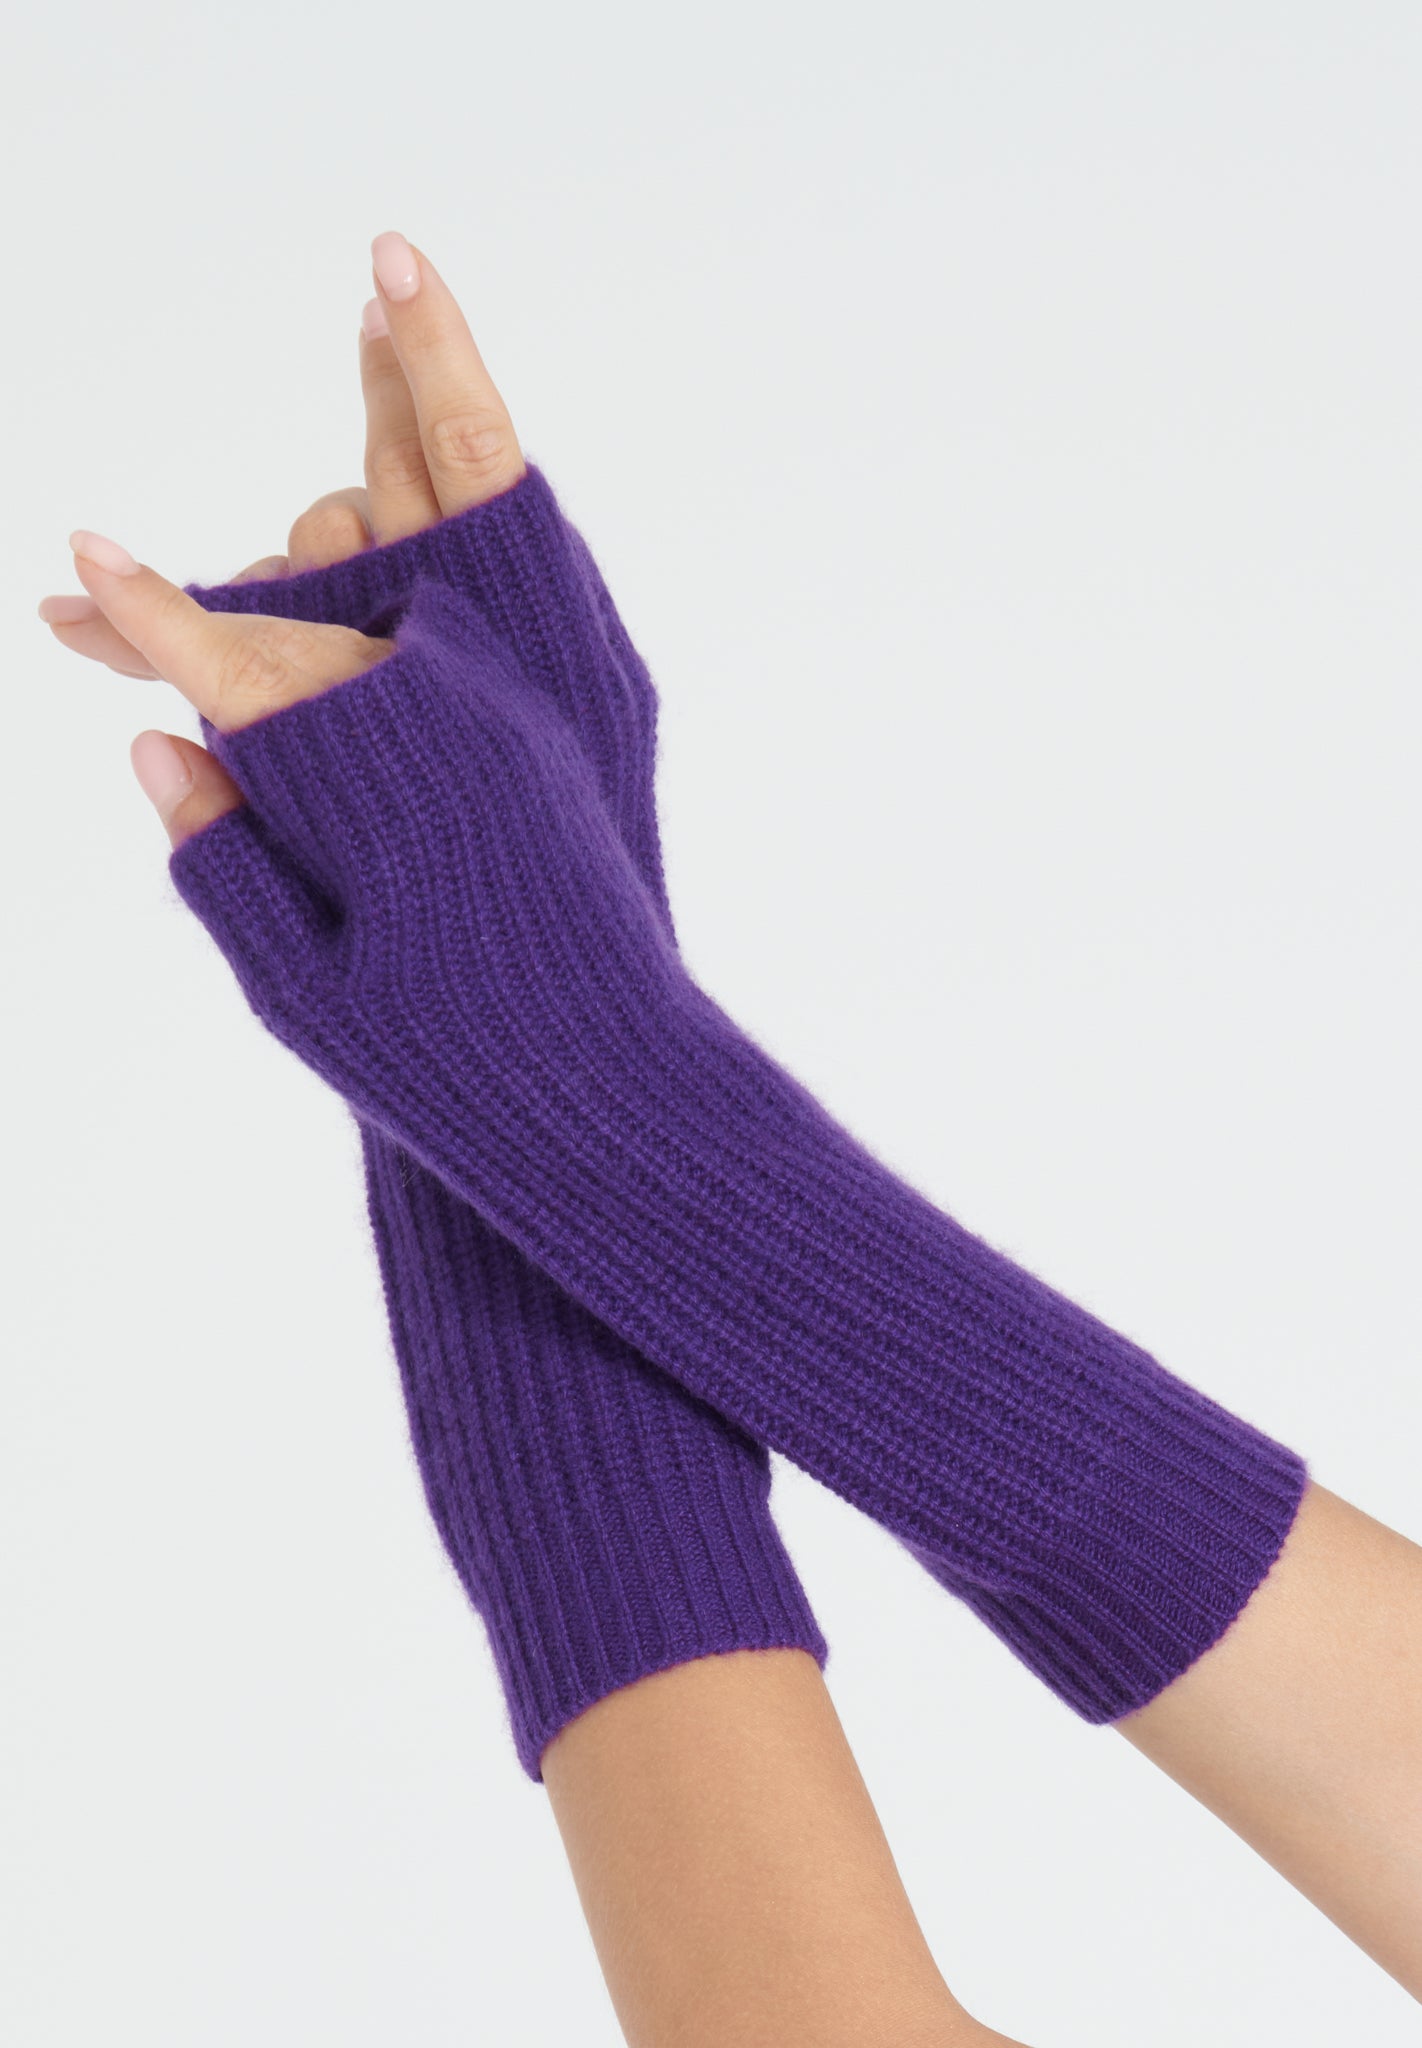 UNI 8 English rib knitted mittens in 4 thread cashmere purple